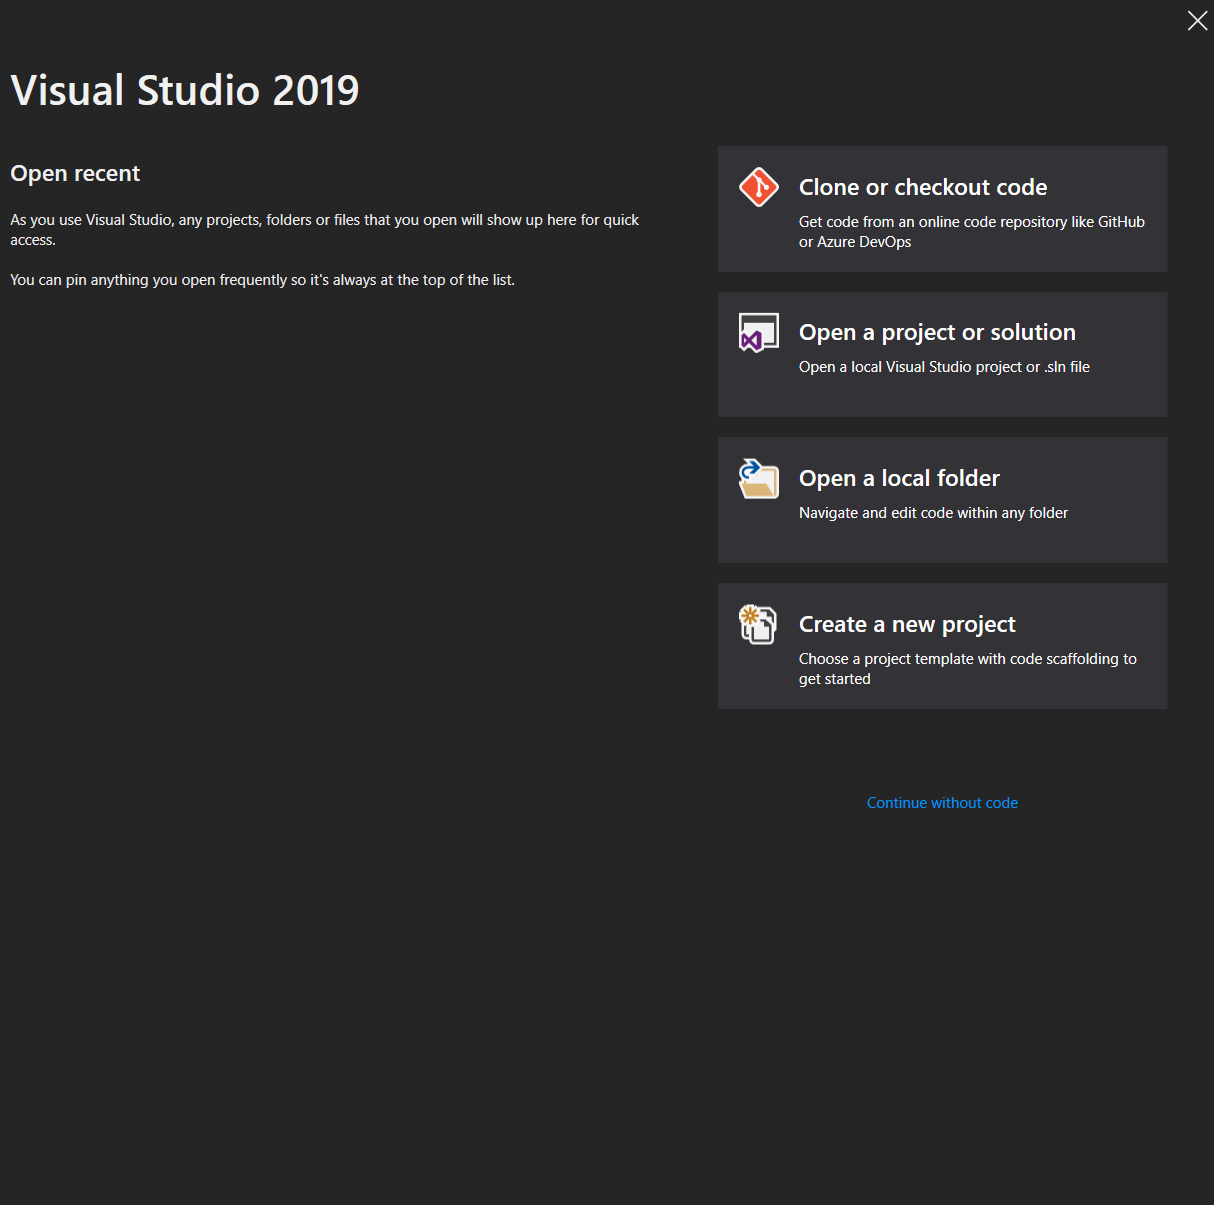 visual studio 2019 release date